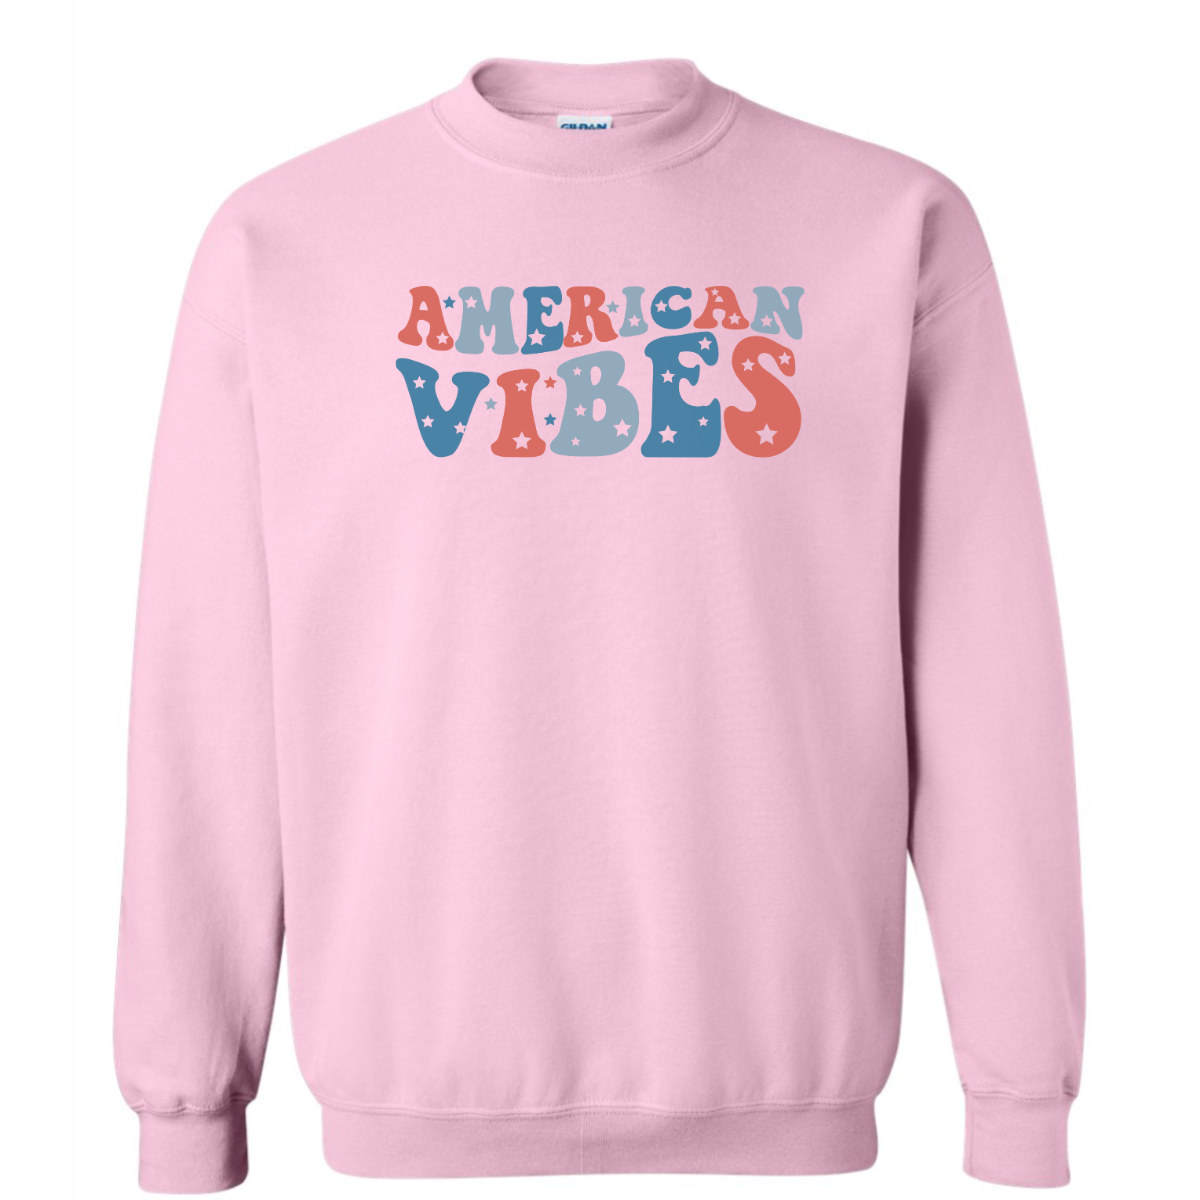 American Vibes: Premium Printed Apparel for Patriotic Style